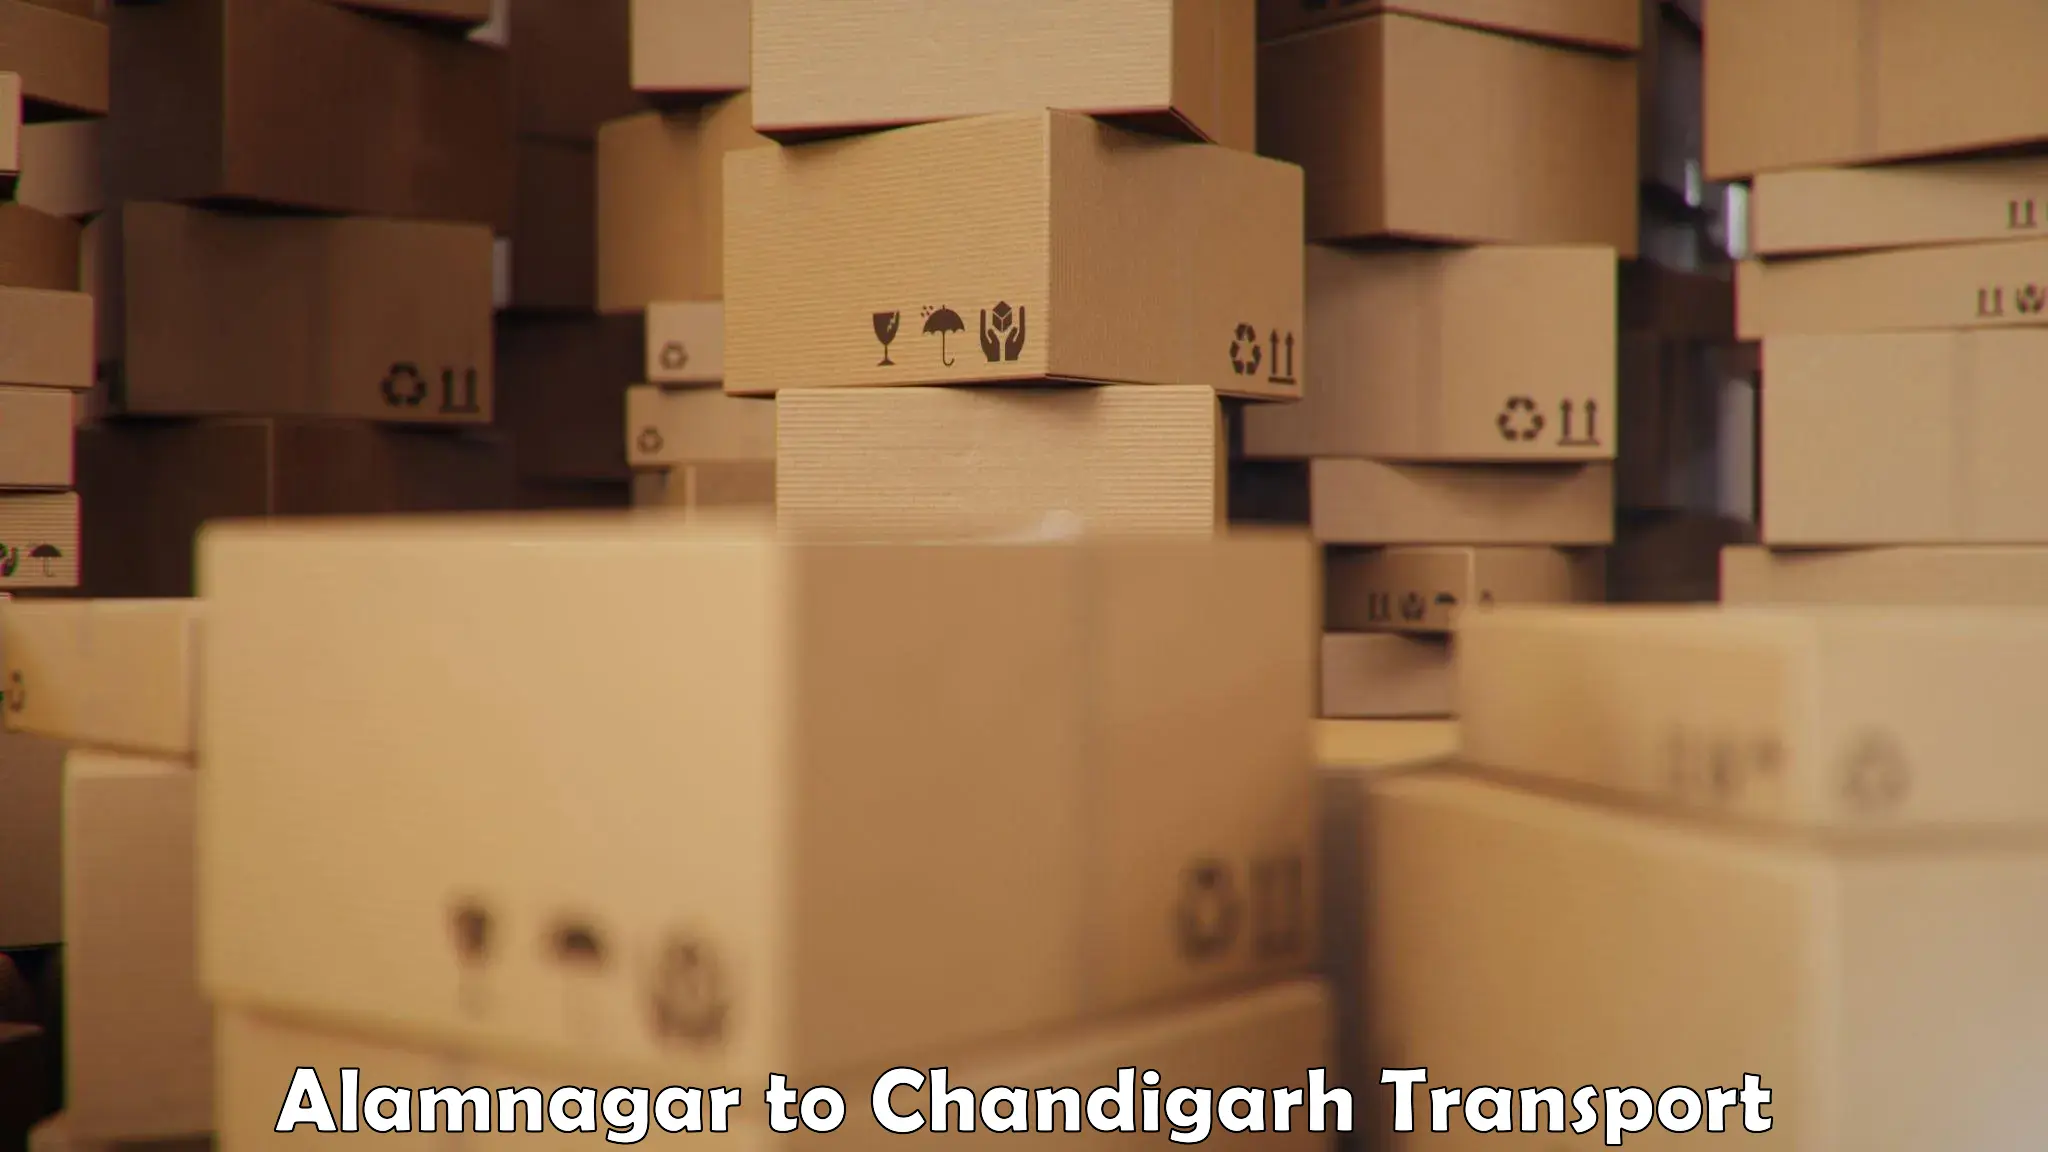 Truck transport companies in India Alamnagar to Chandigarh